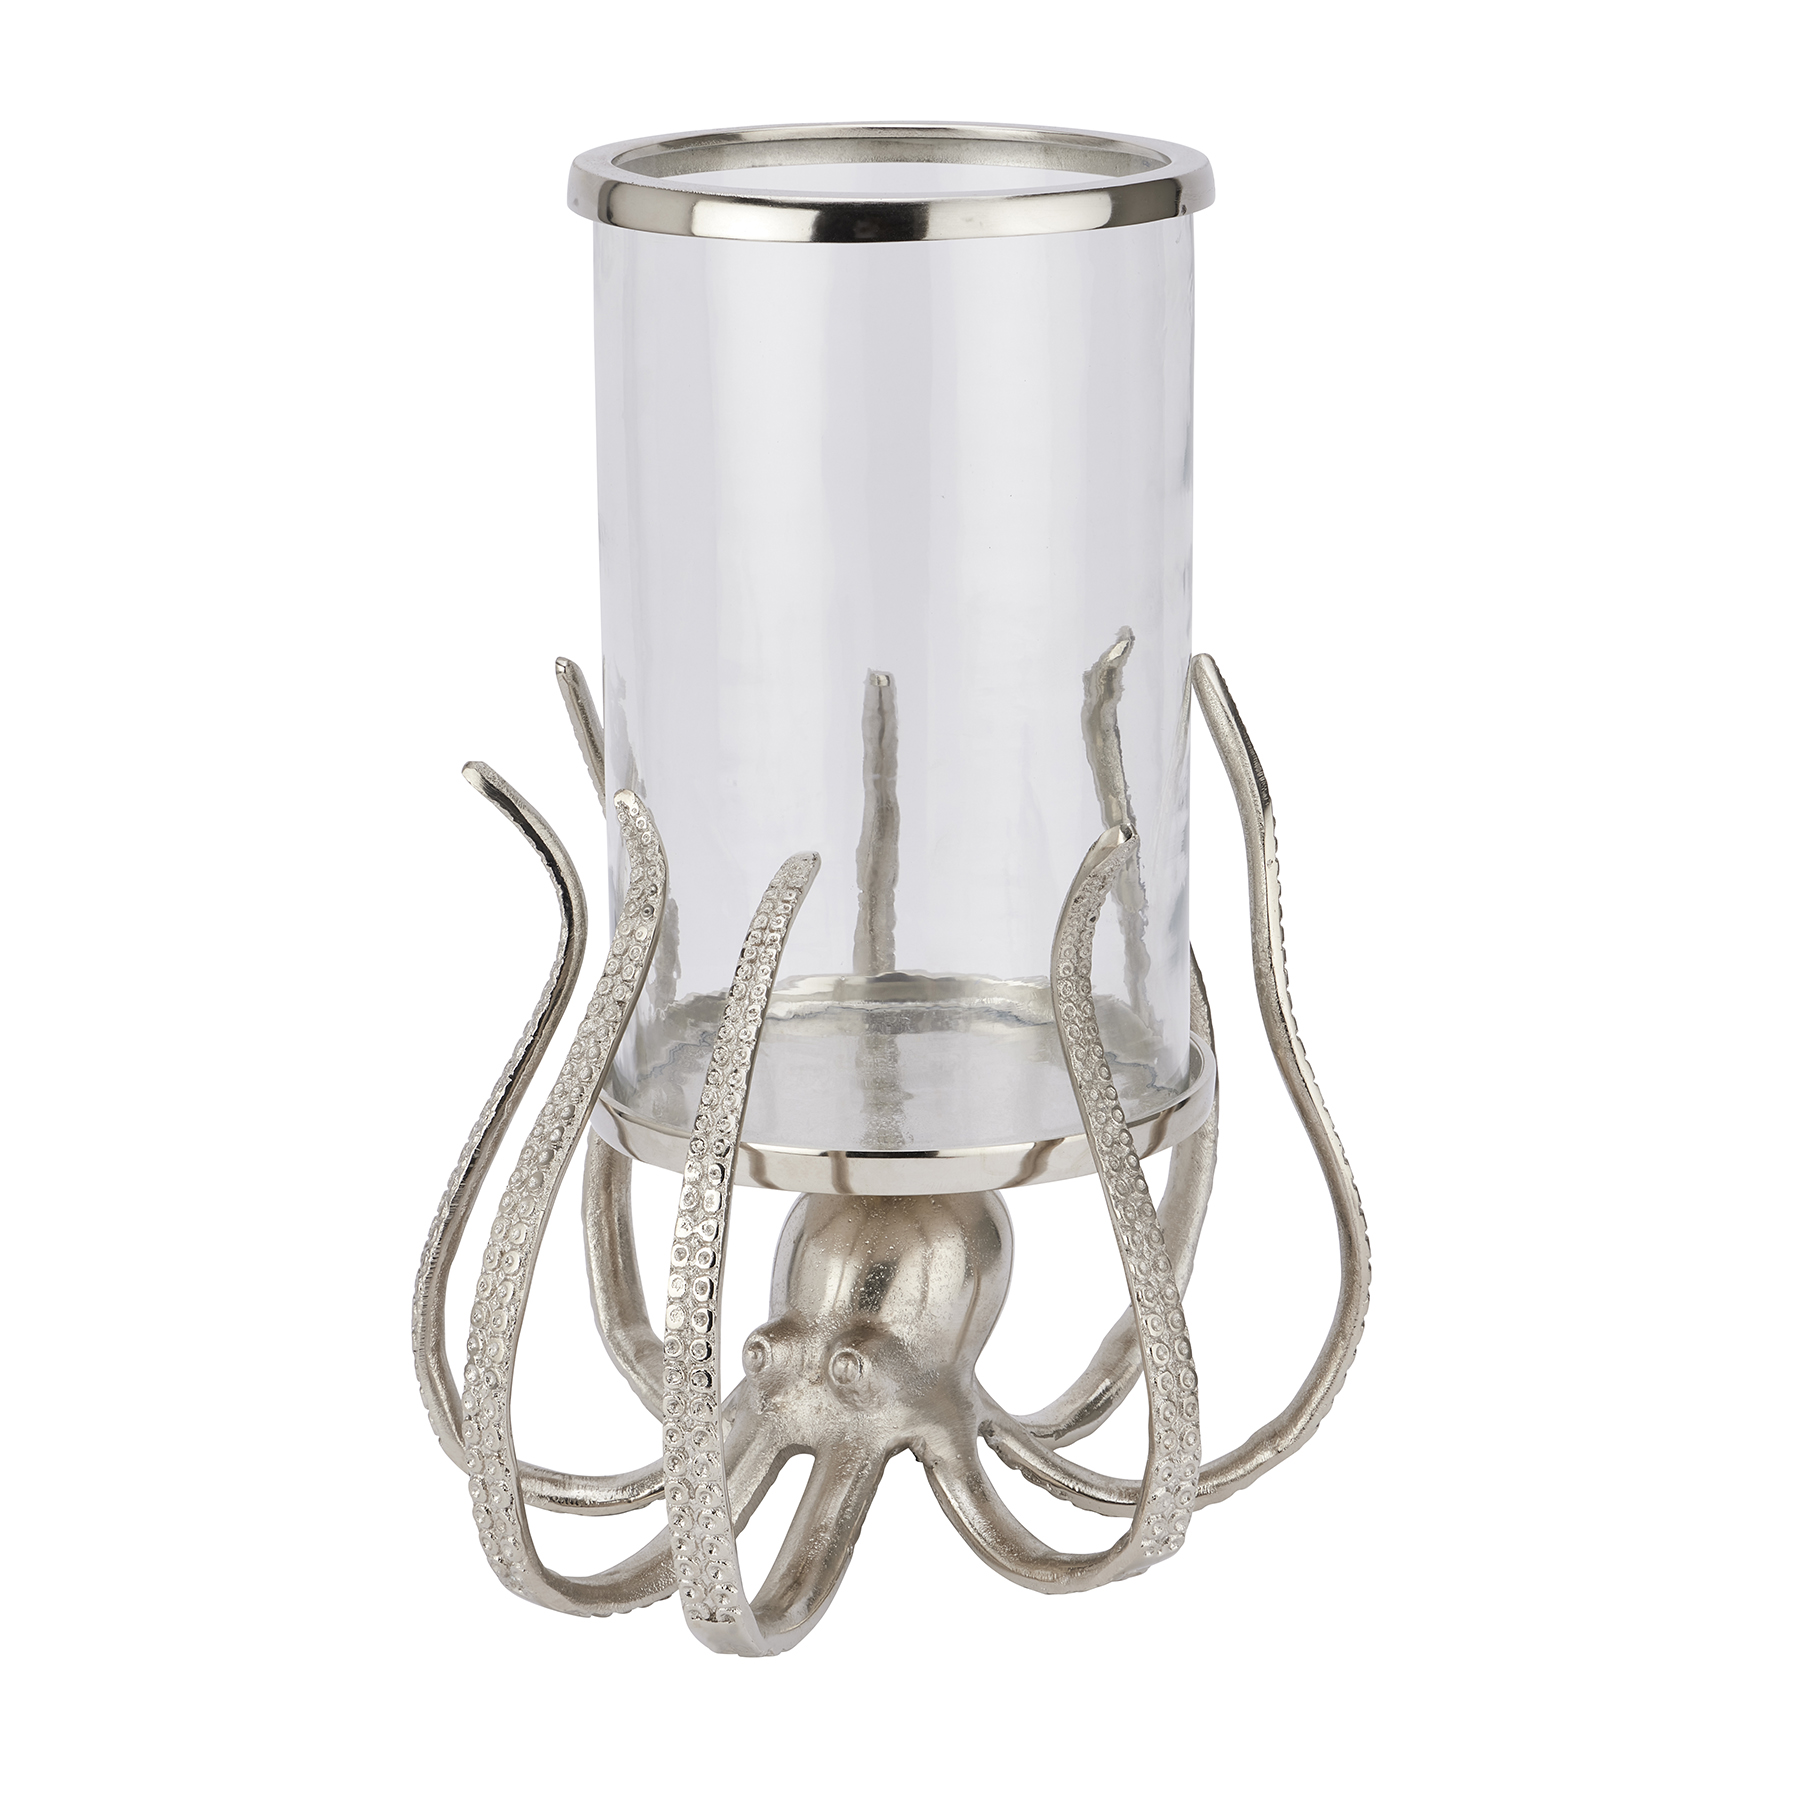 Large Silver Octopus Candle Hurricane Lantern - Image 1